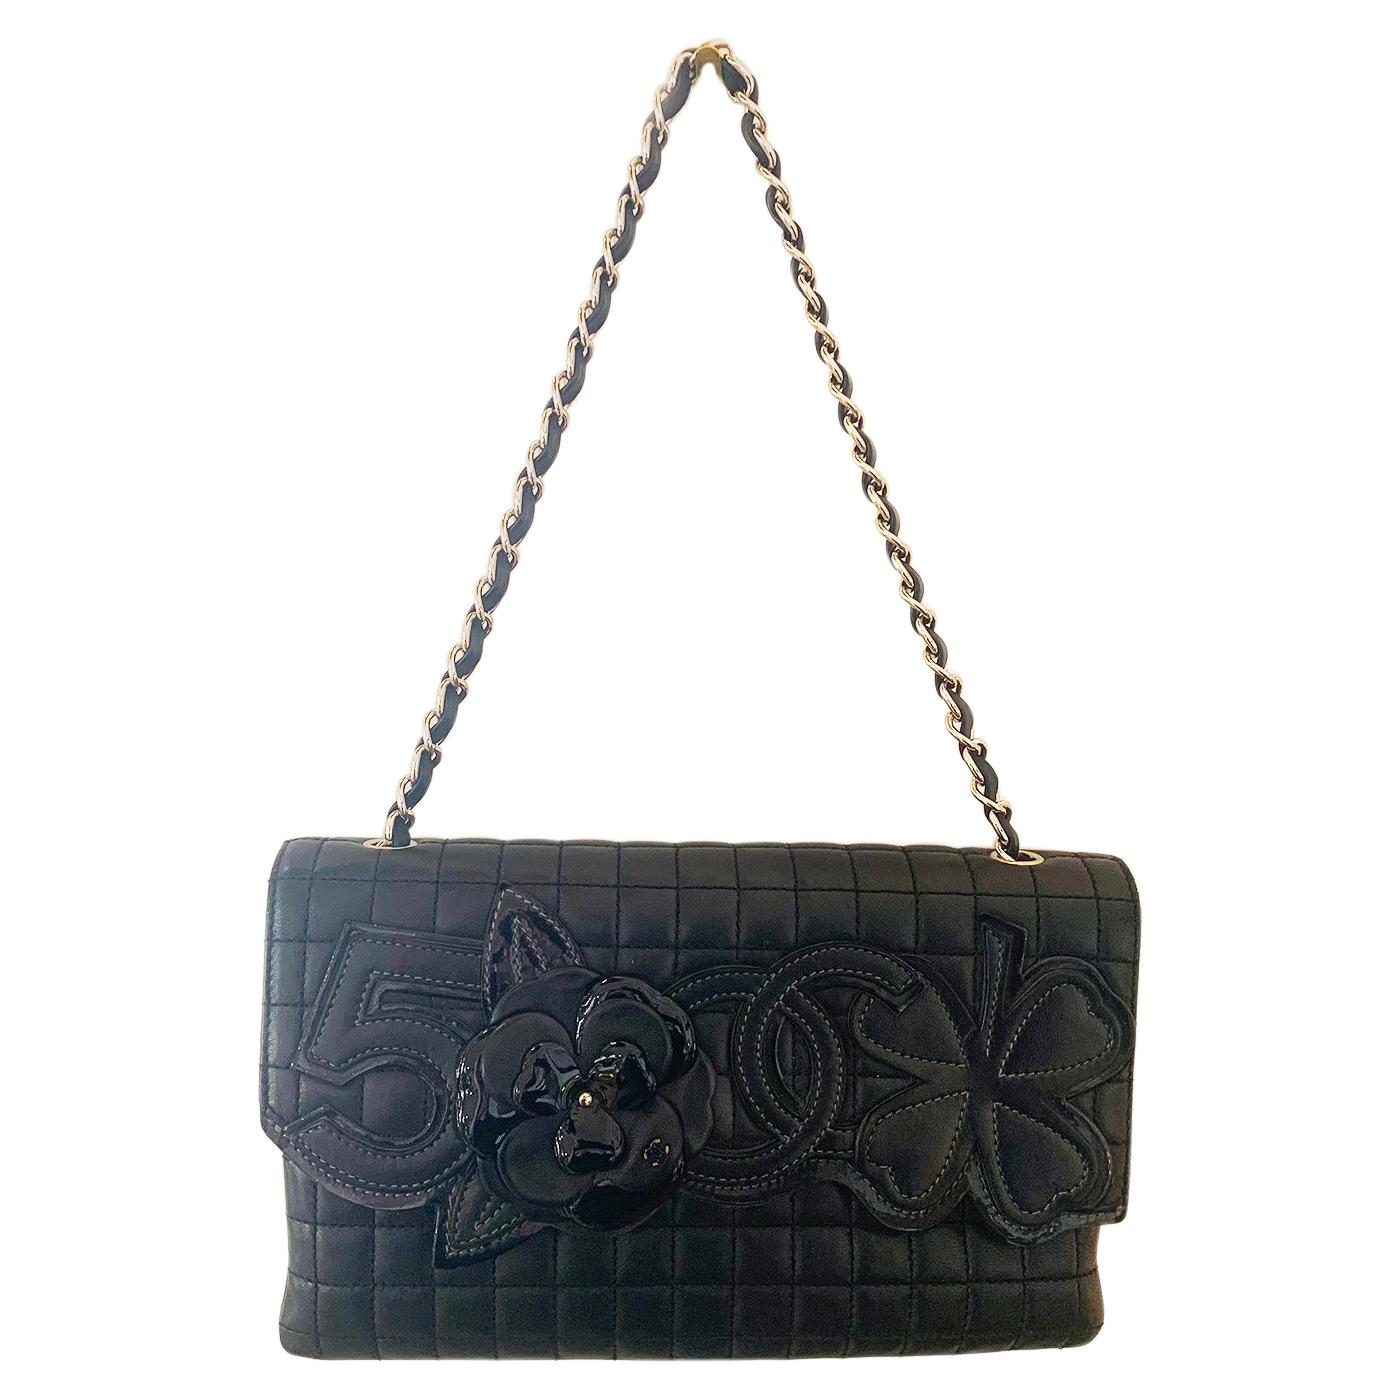 Authentic Black Chanel Camelia handbag bag purse For Sale